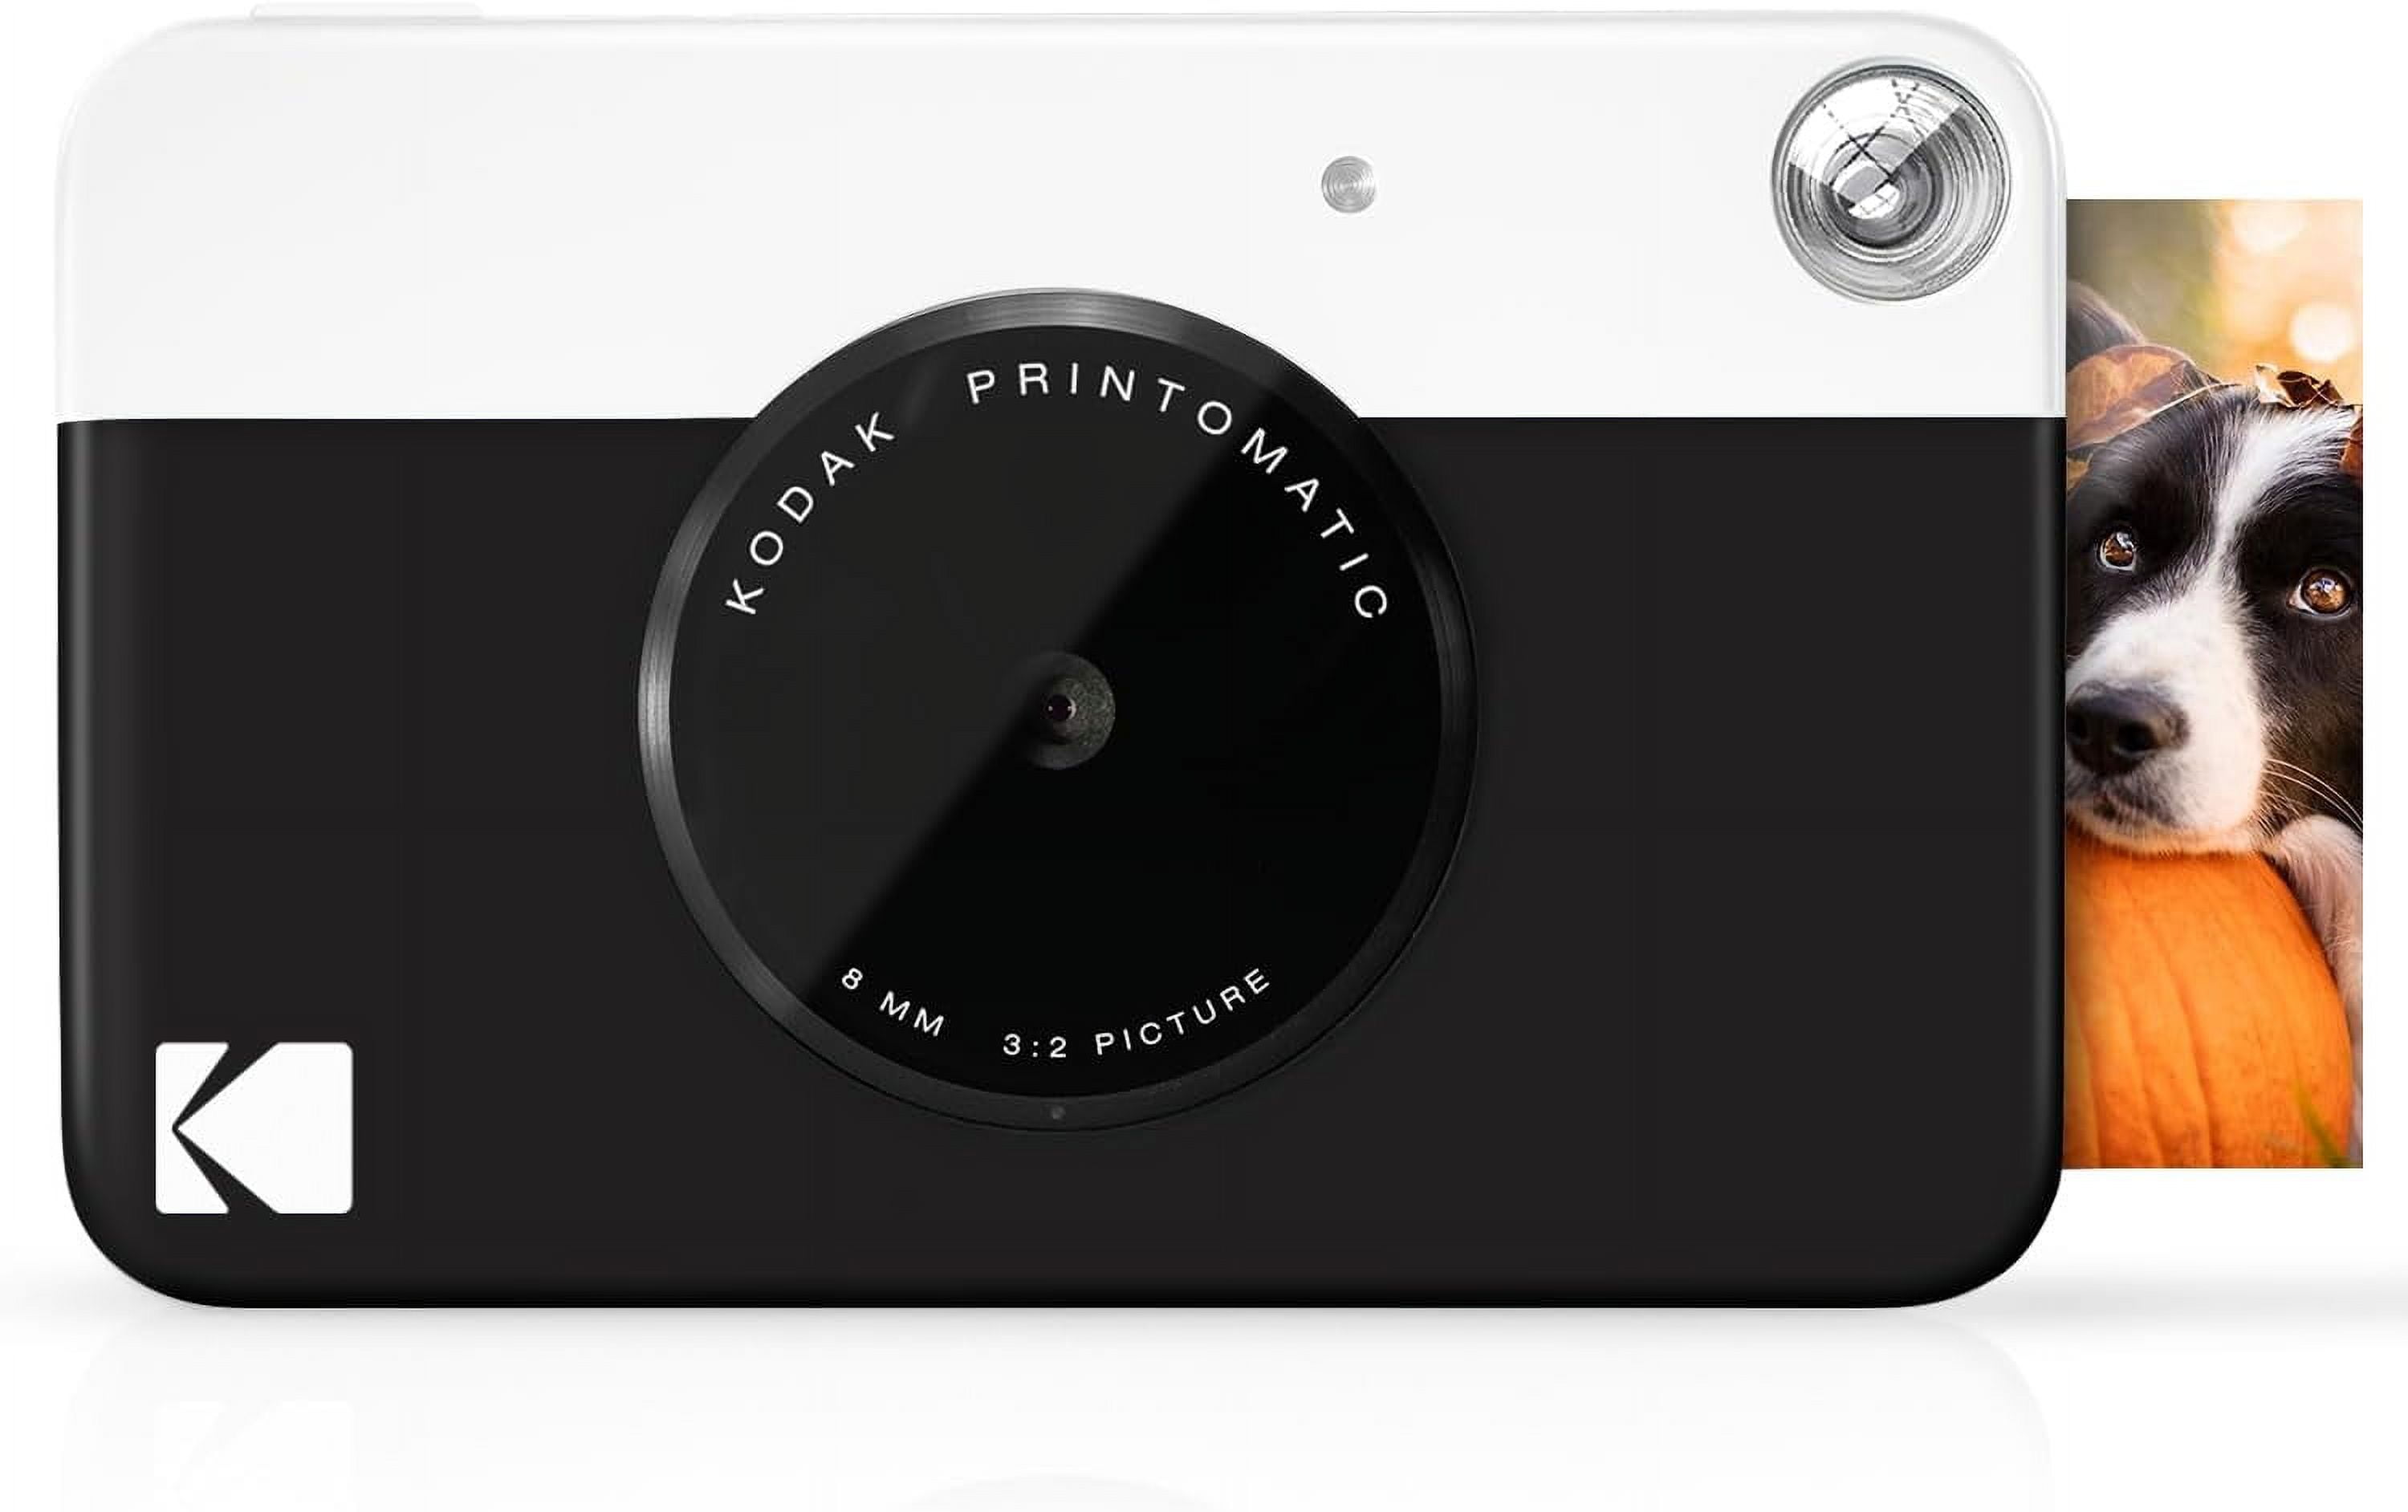 Kodak 2x3 Premium Zink Photo Paper (120 Pack) Compatible with Kodak  Smile, Kodak Step, PRINTOMATIC